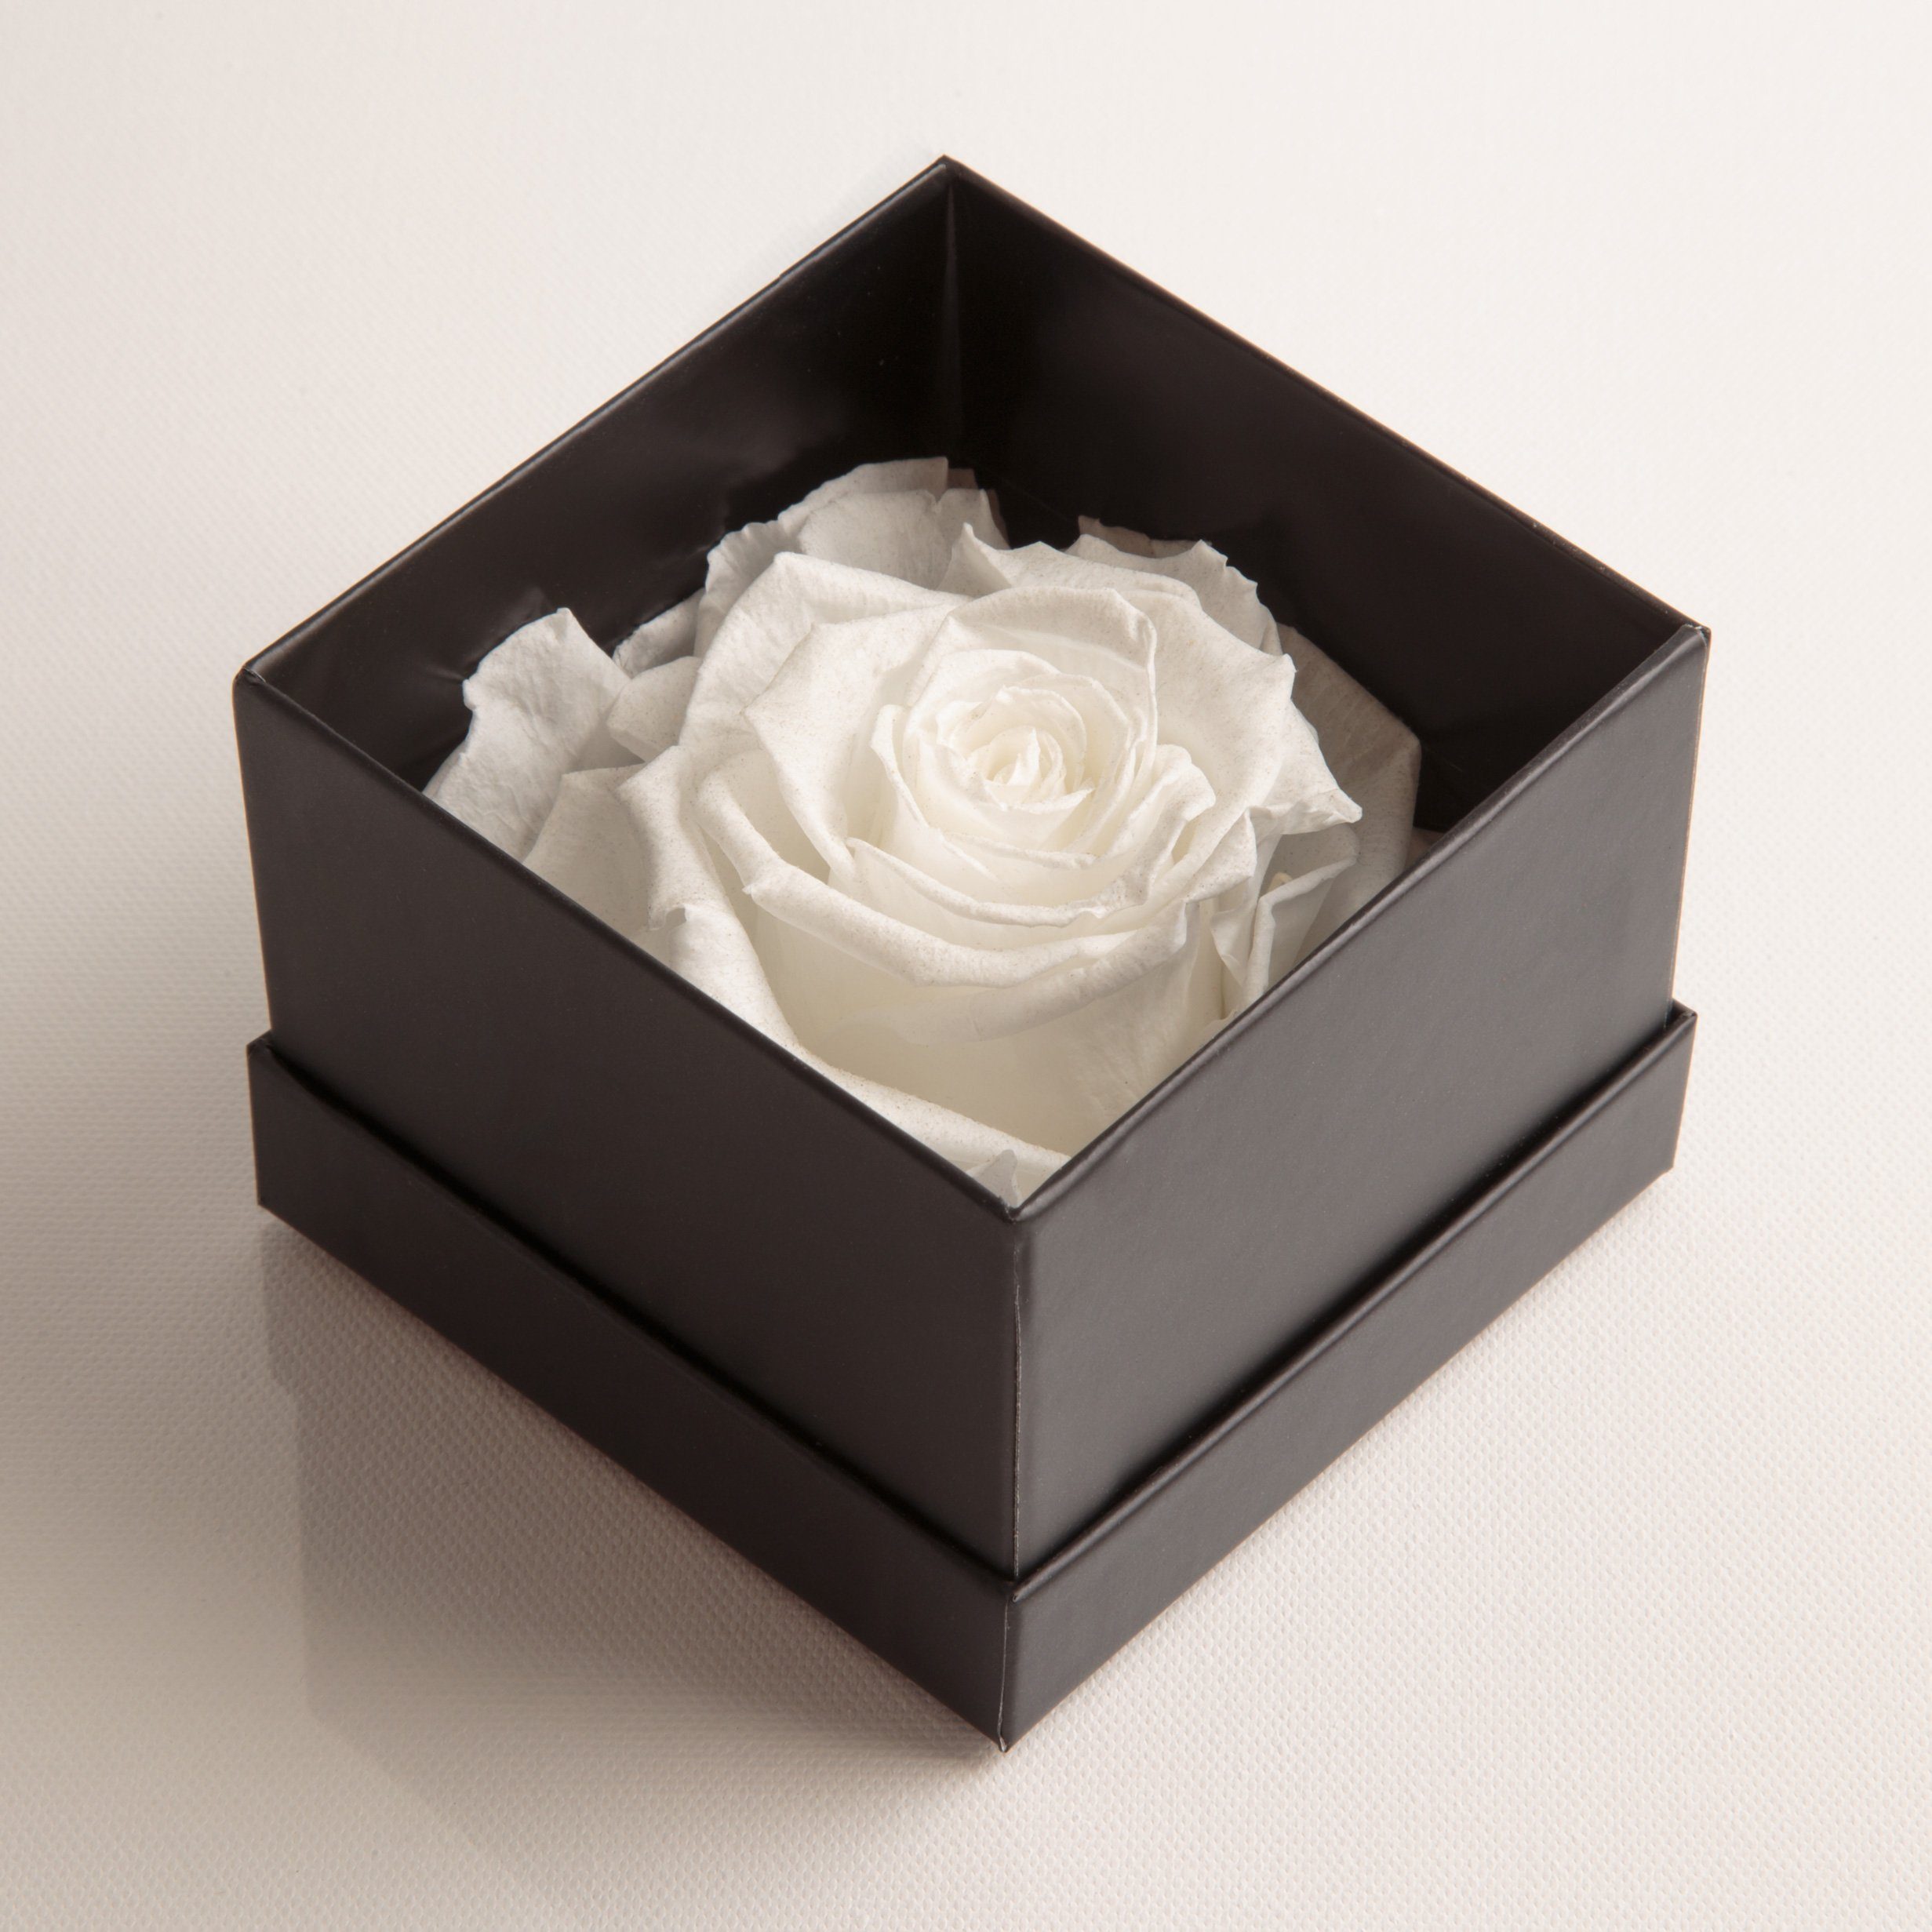 Kunstblume Infinity Rose SCHULZ Höhe Heidelberg, Rose Liebesbeweis Box You Idee Echte konserviert cm, Love Rose, Weiß 6 ROSEMARIE I Geschenk